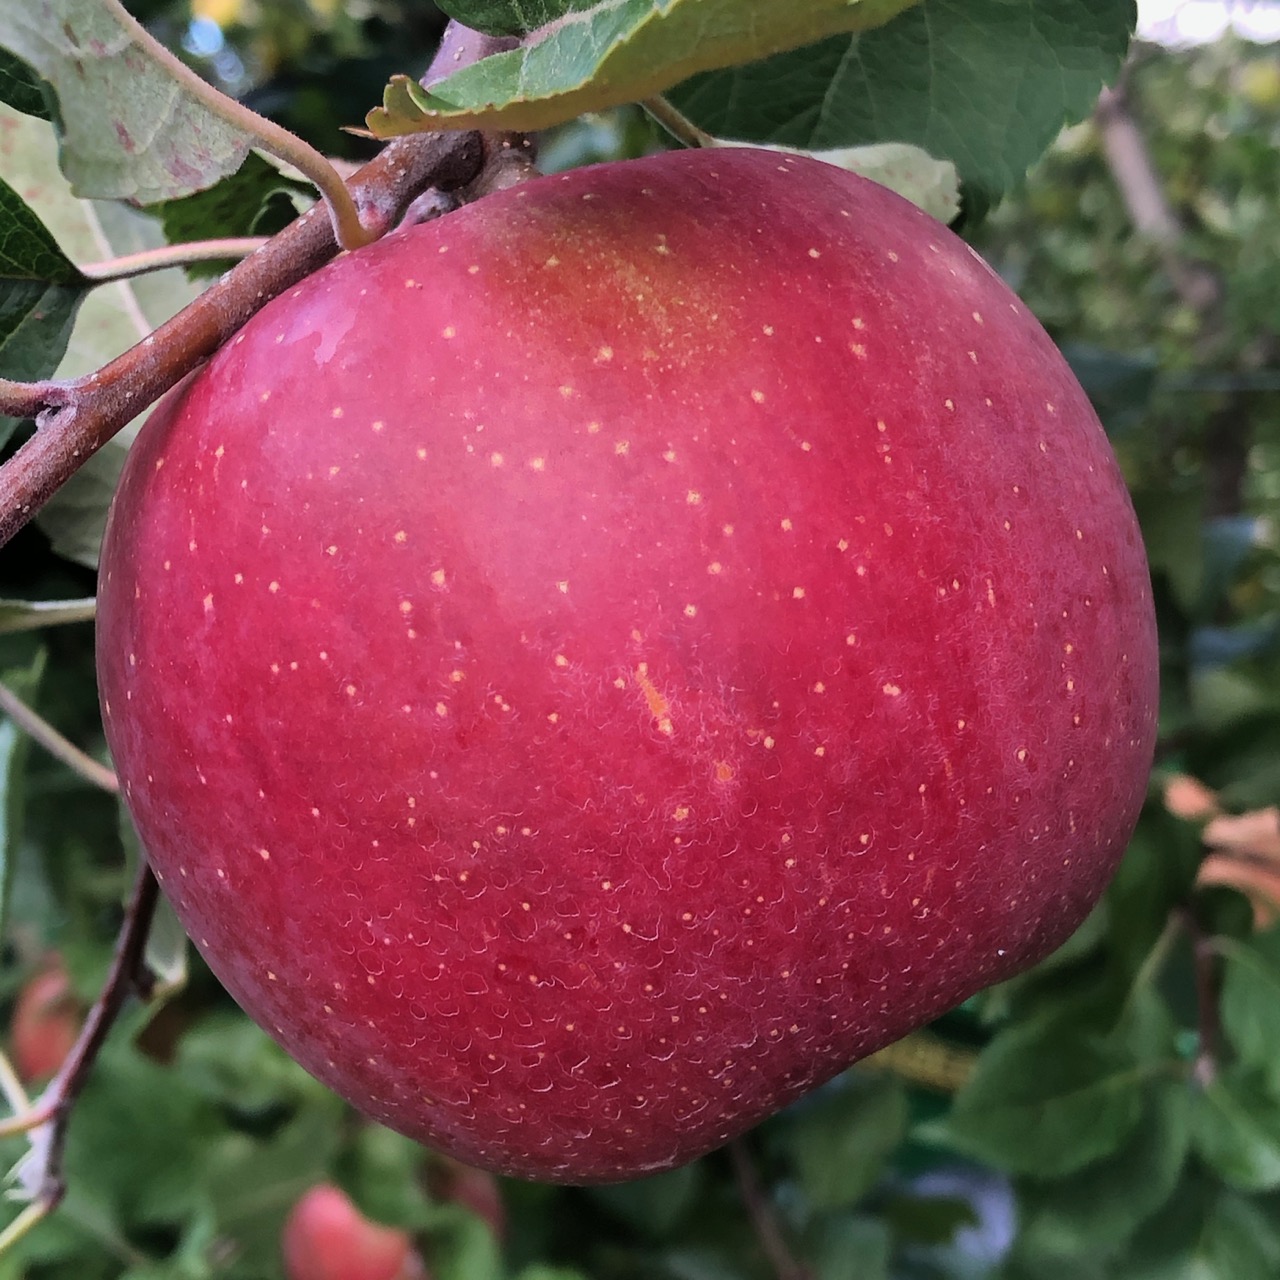 Sweetango (Minneiska) - Adam's Apples